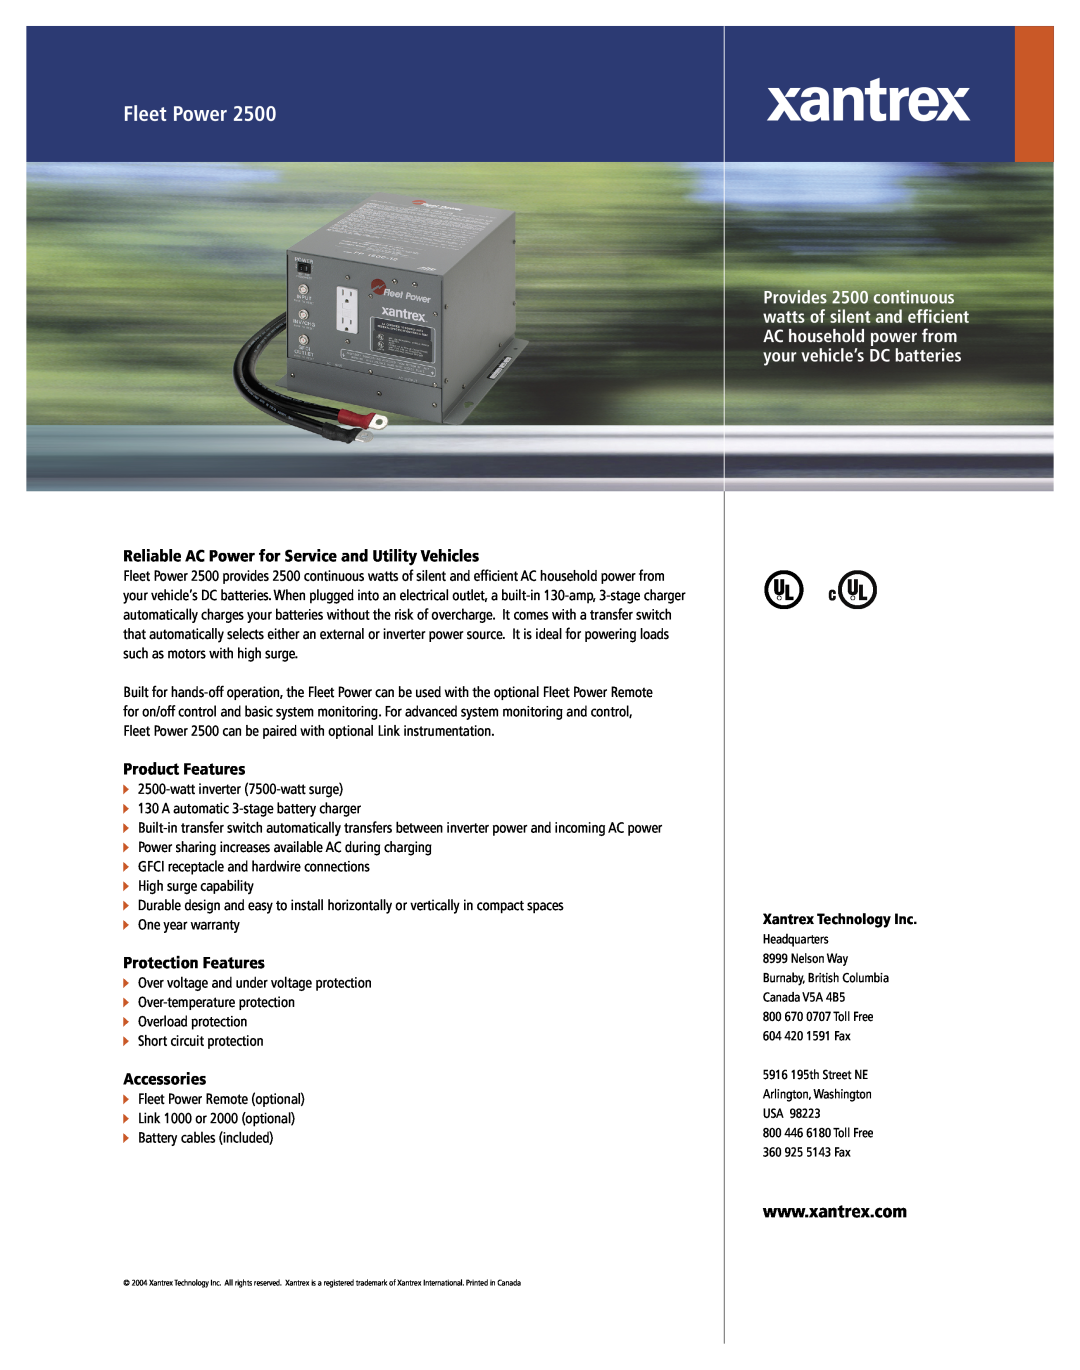 Xantrex Technology owner manual Owners Manual, Fleet Power Inverter/Battery Chargers, FLEET POWER FLEET POWER 2000UL 